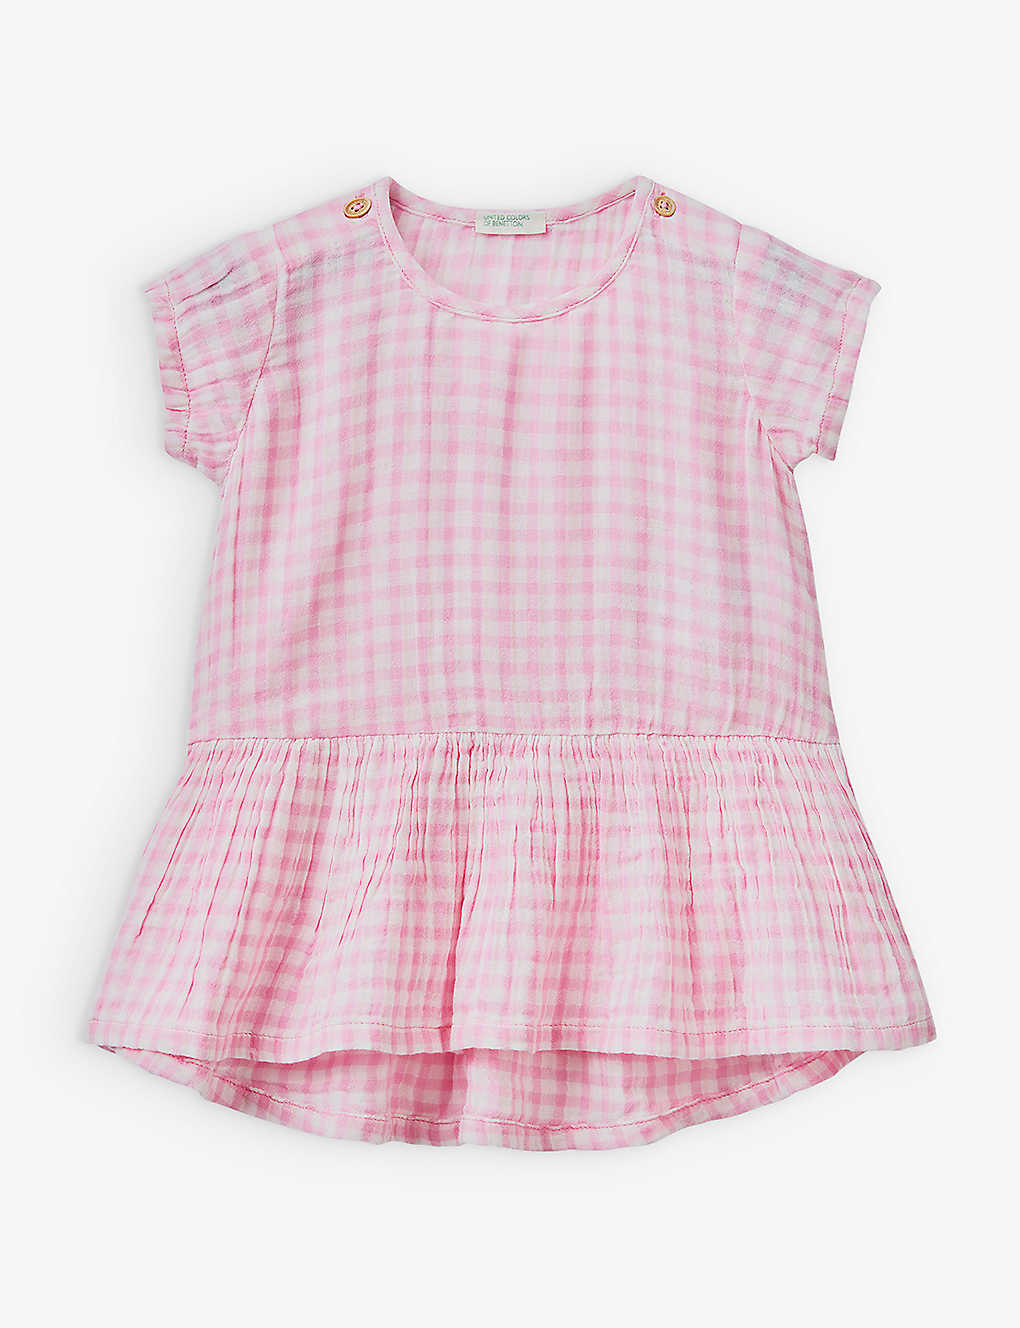 Benetton Babies'  Pink Check Gingham Cotton Dress 1-18 Months